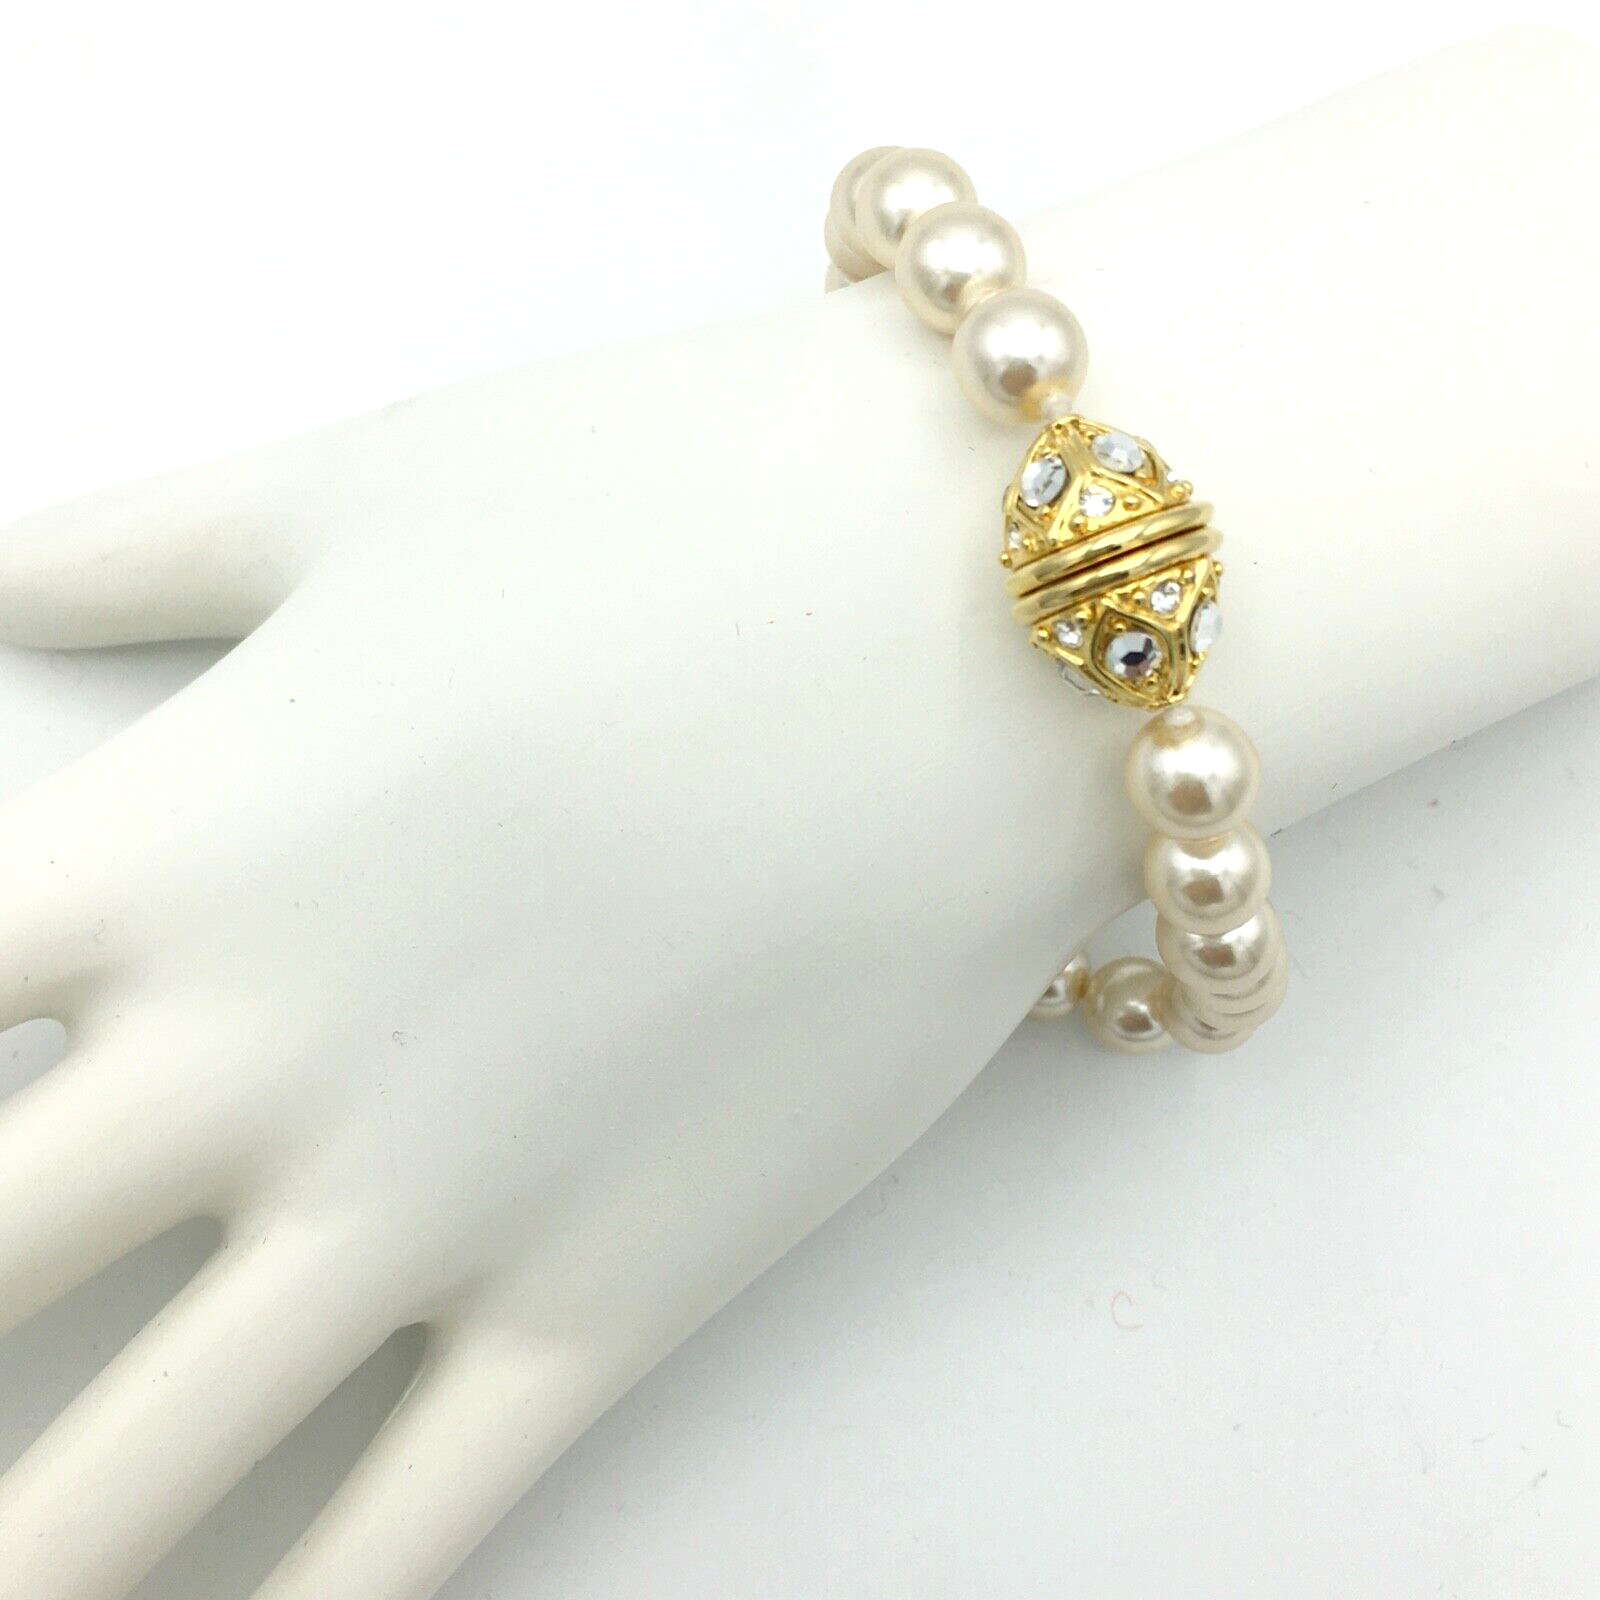 NOLAN MILLER faux pearl bracelet - single strand w gold-tone crystal screw clasp - $30.00